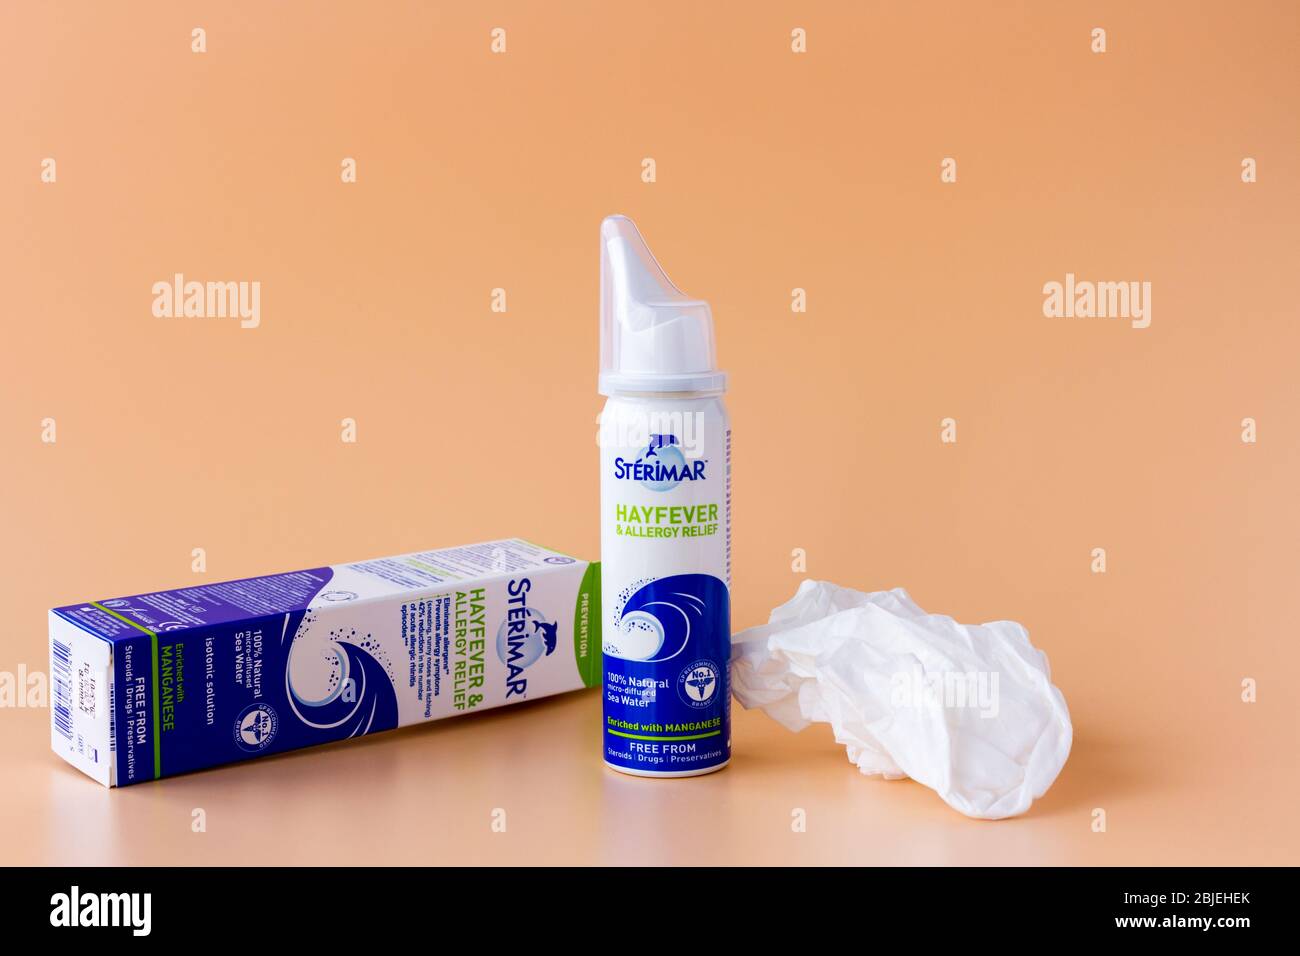 Sterimar natural hayfever & allergy relief nasal spray Stock Photo